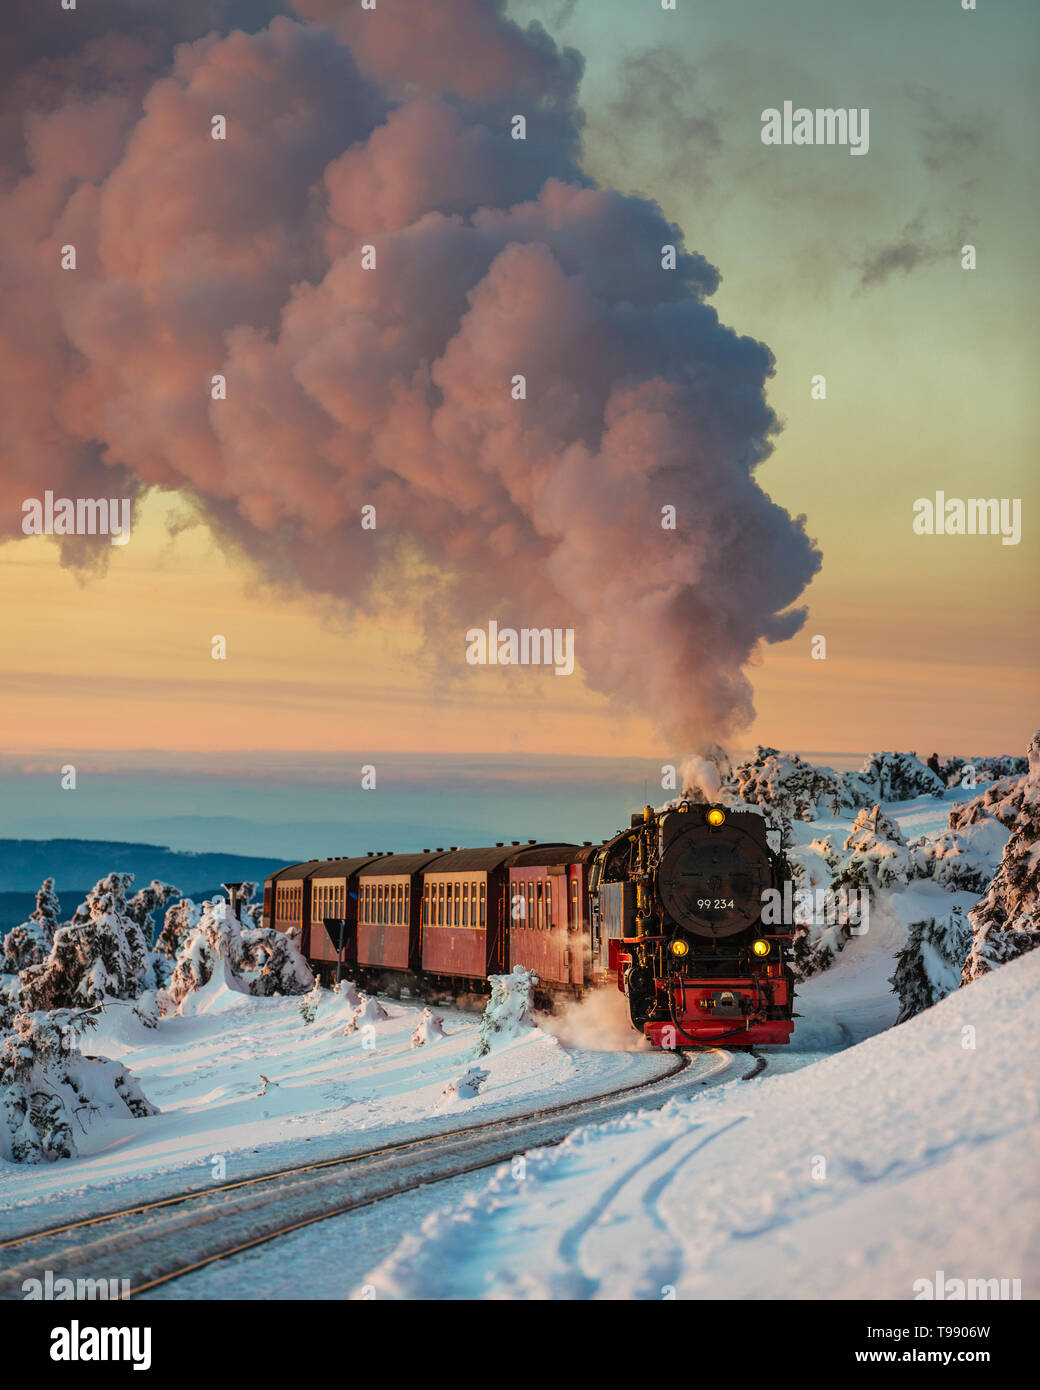 Brockenbahn in winter with snow, Harz, Germany Stock Photo